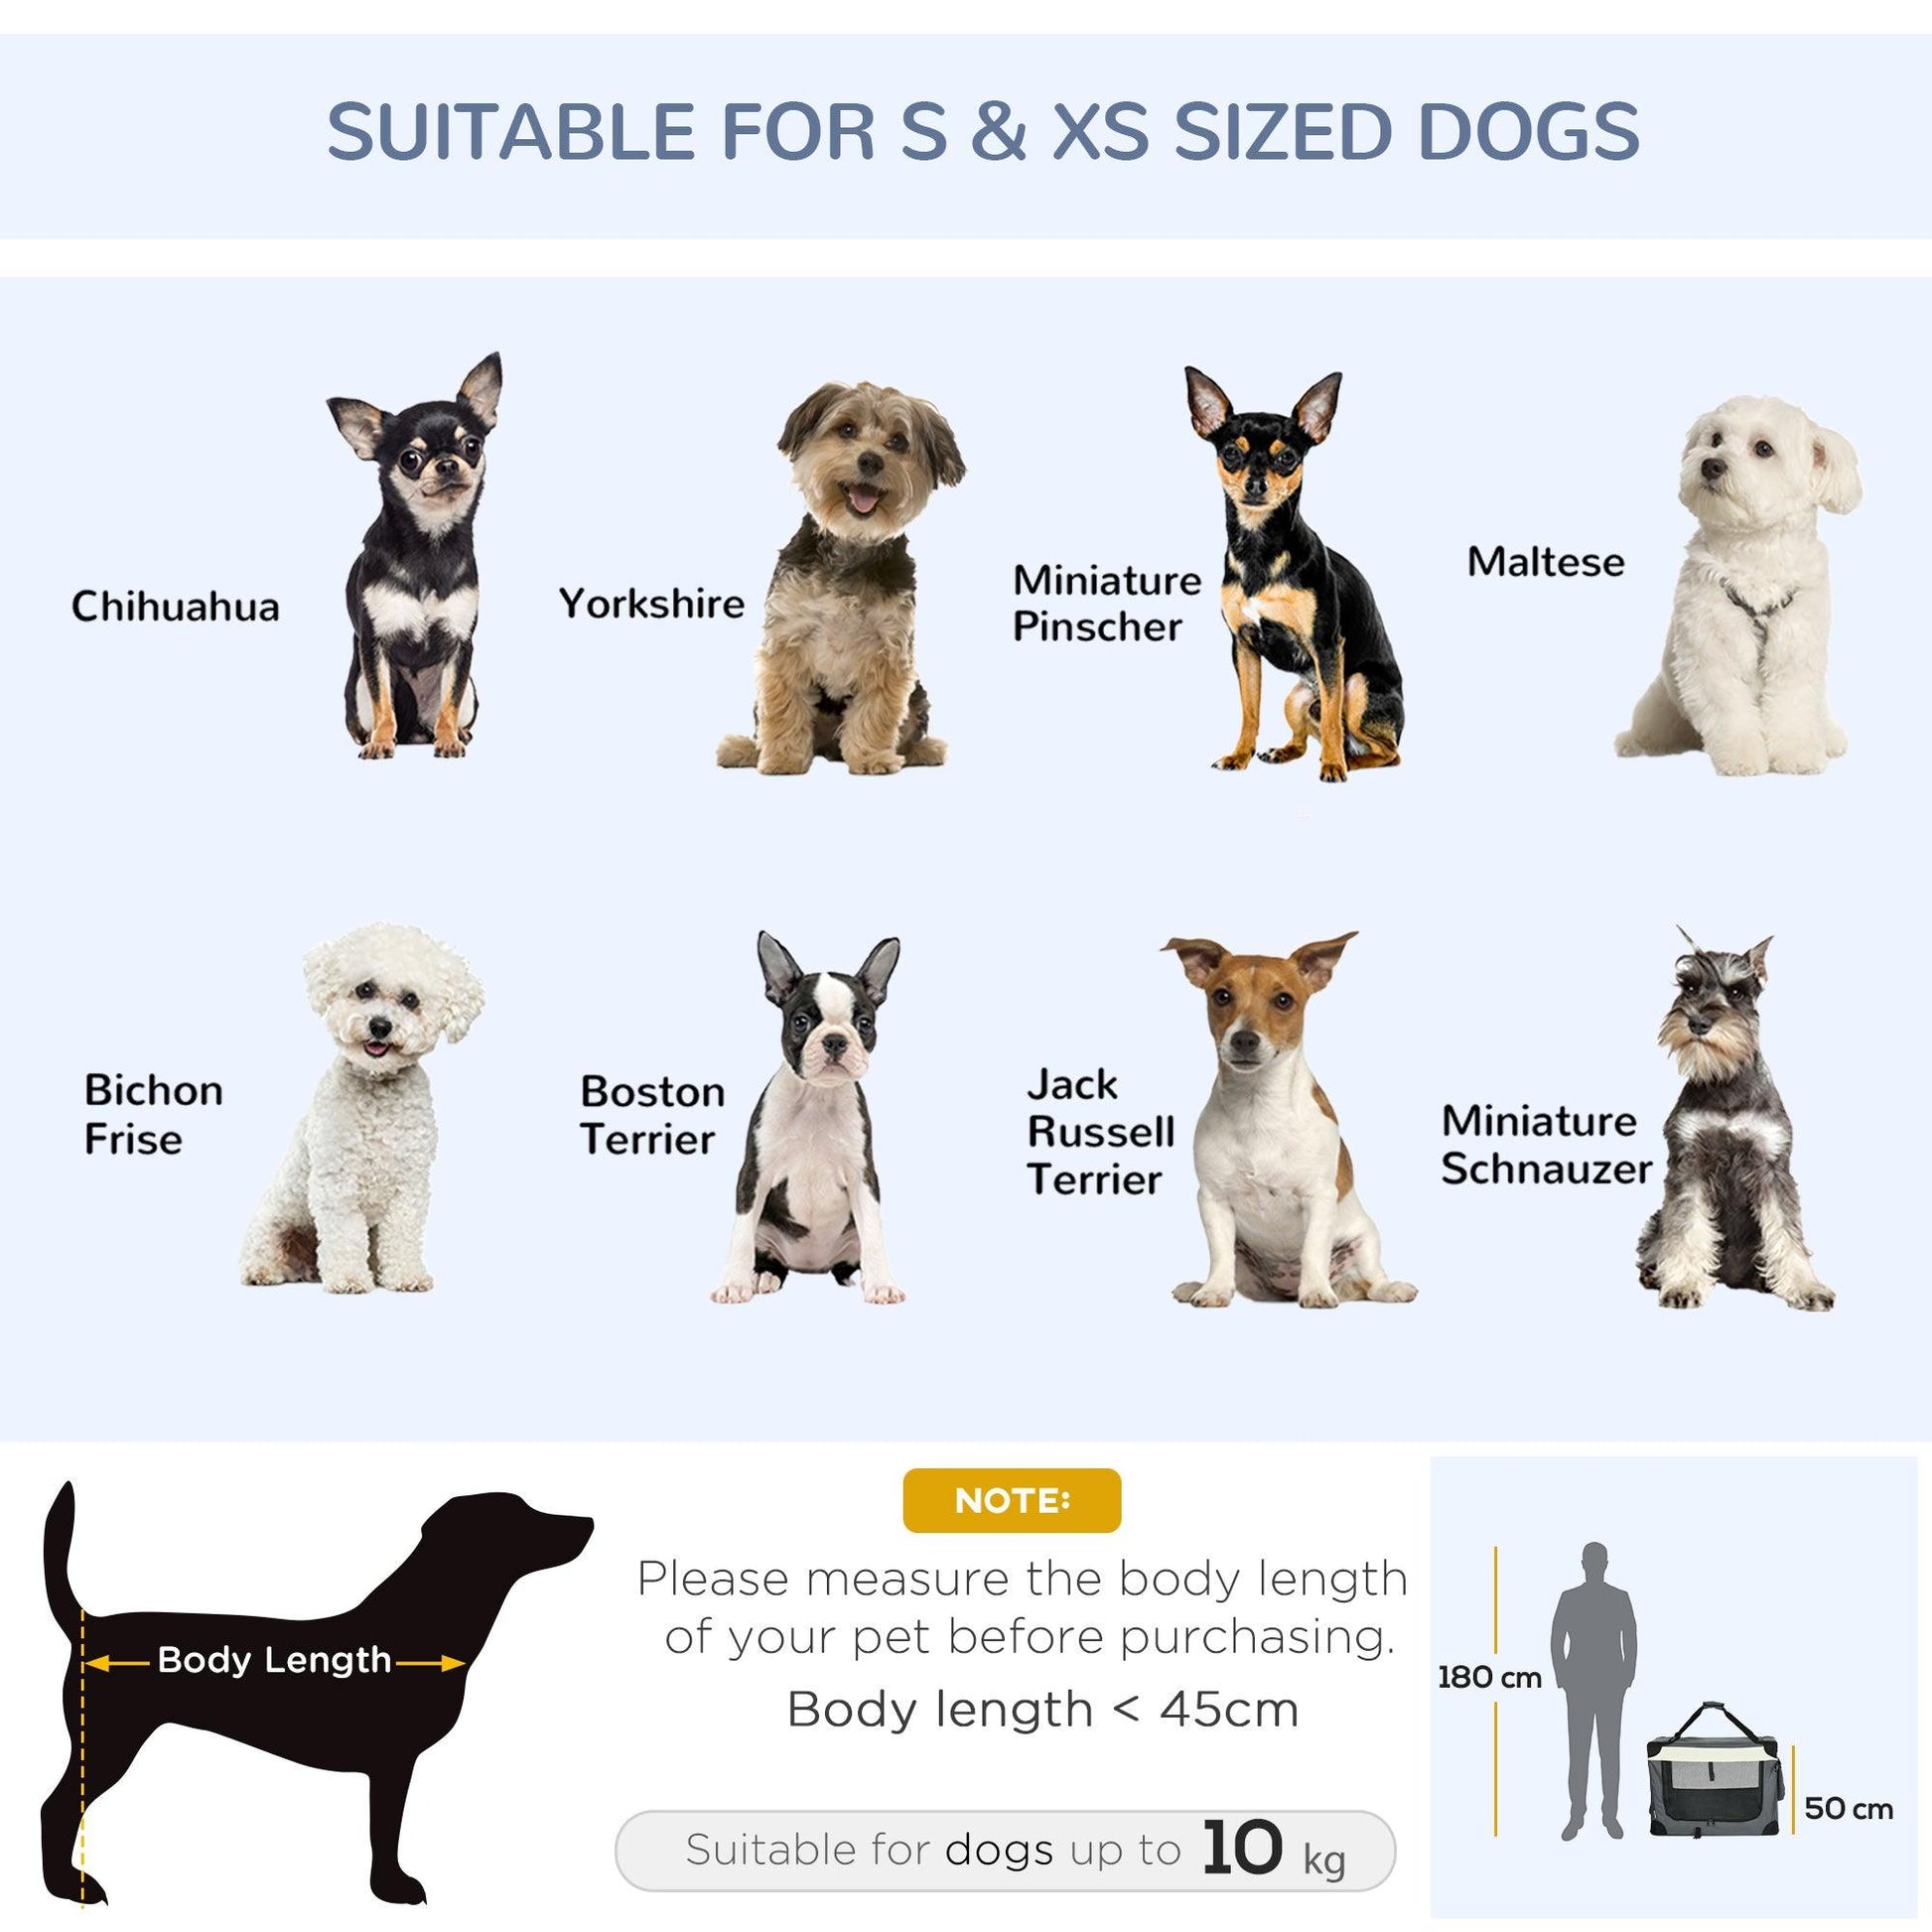 PawHut 70cm Foldable Pet Carrier, Portable Dog/Cat Travel Bag w/ Cushion - Grey - ALL4U RETAILER LTD